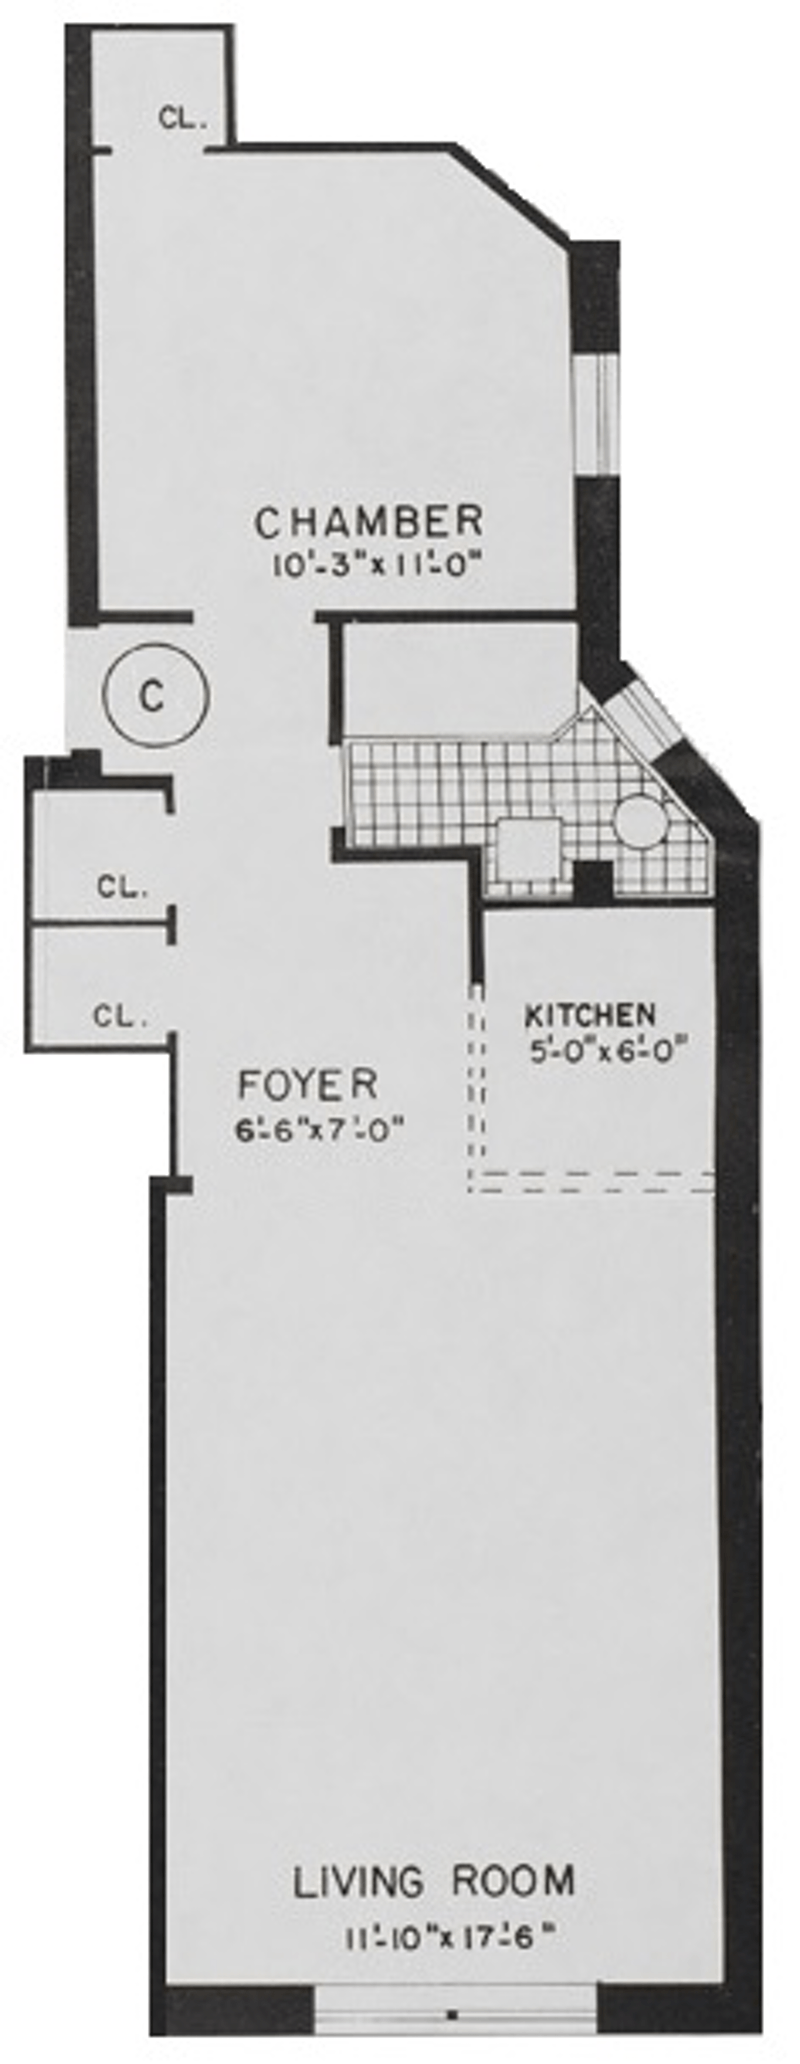 Floorplan for 534 East 88th Street, 2C